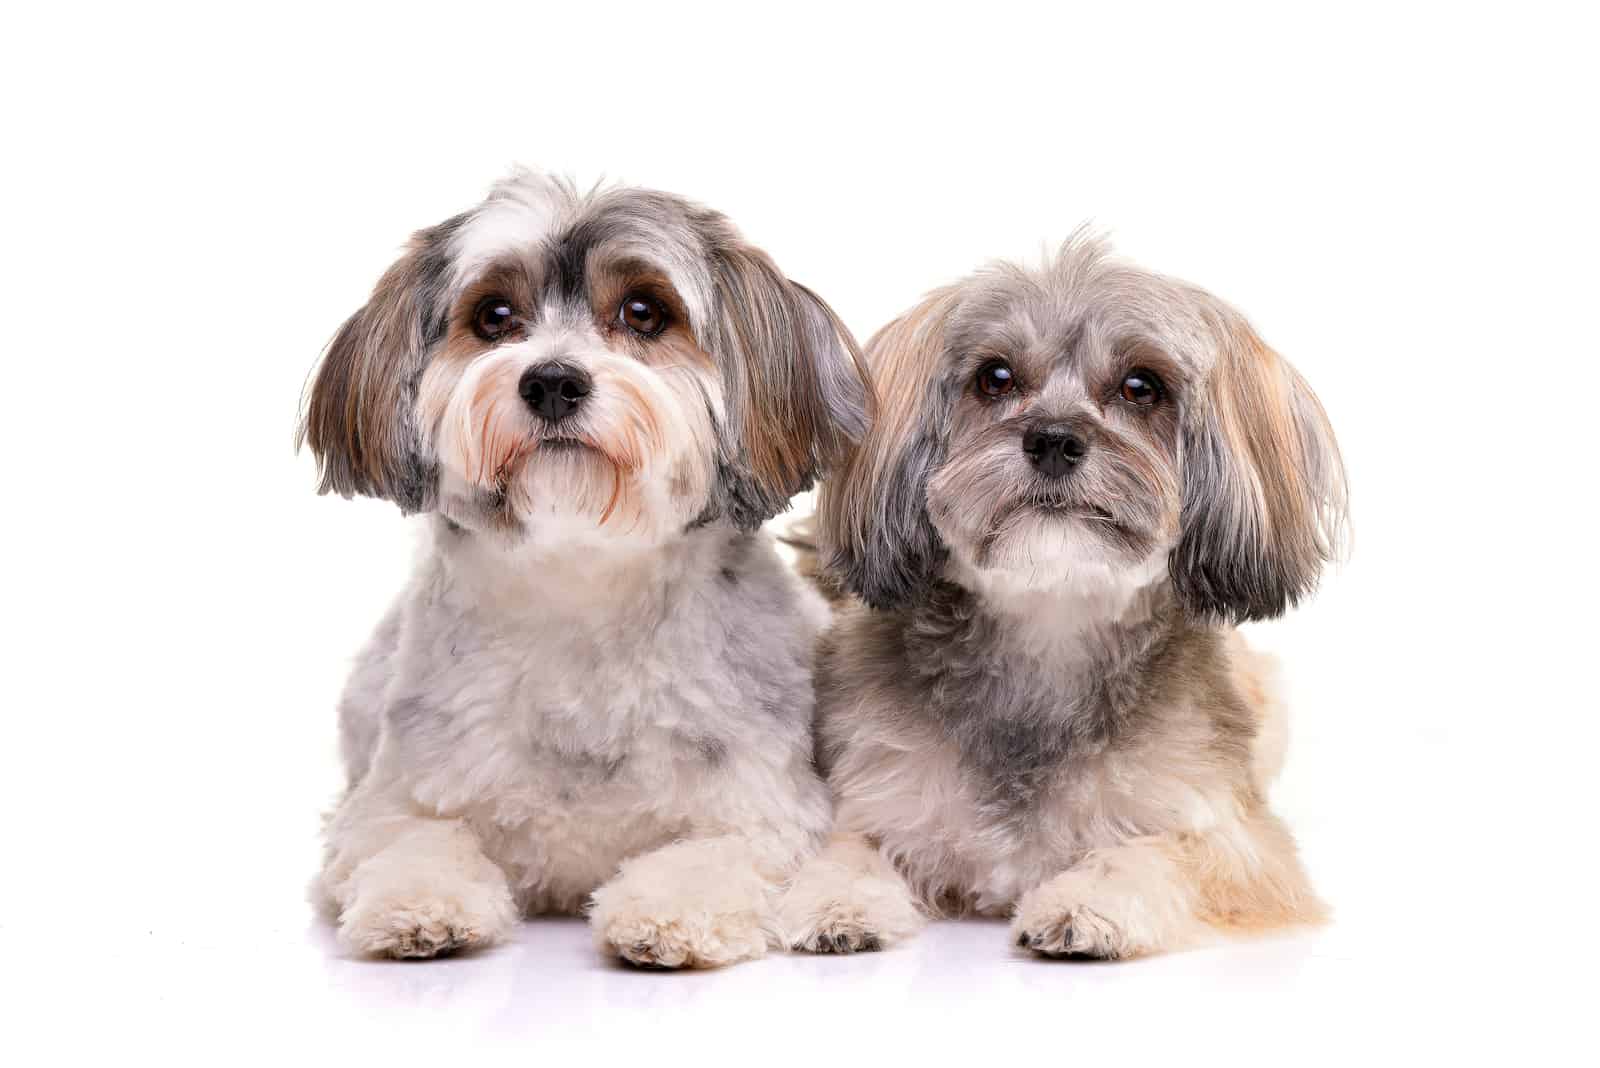 two adorable Havanese dog